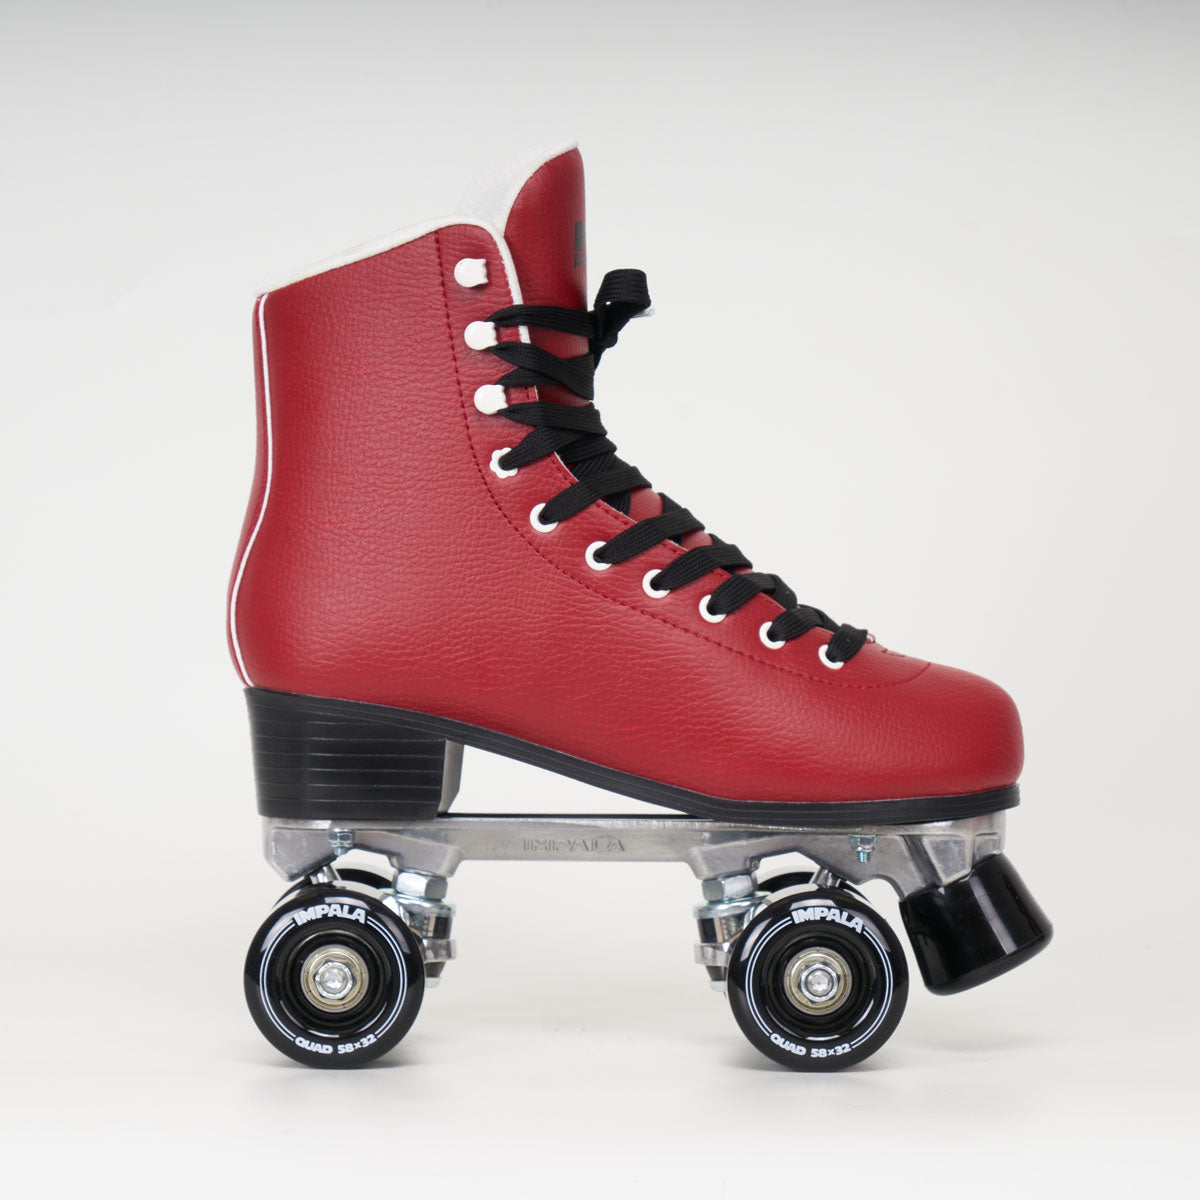 Impala Roller Skates - Cherry